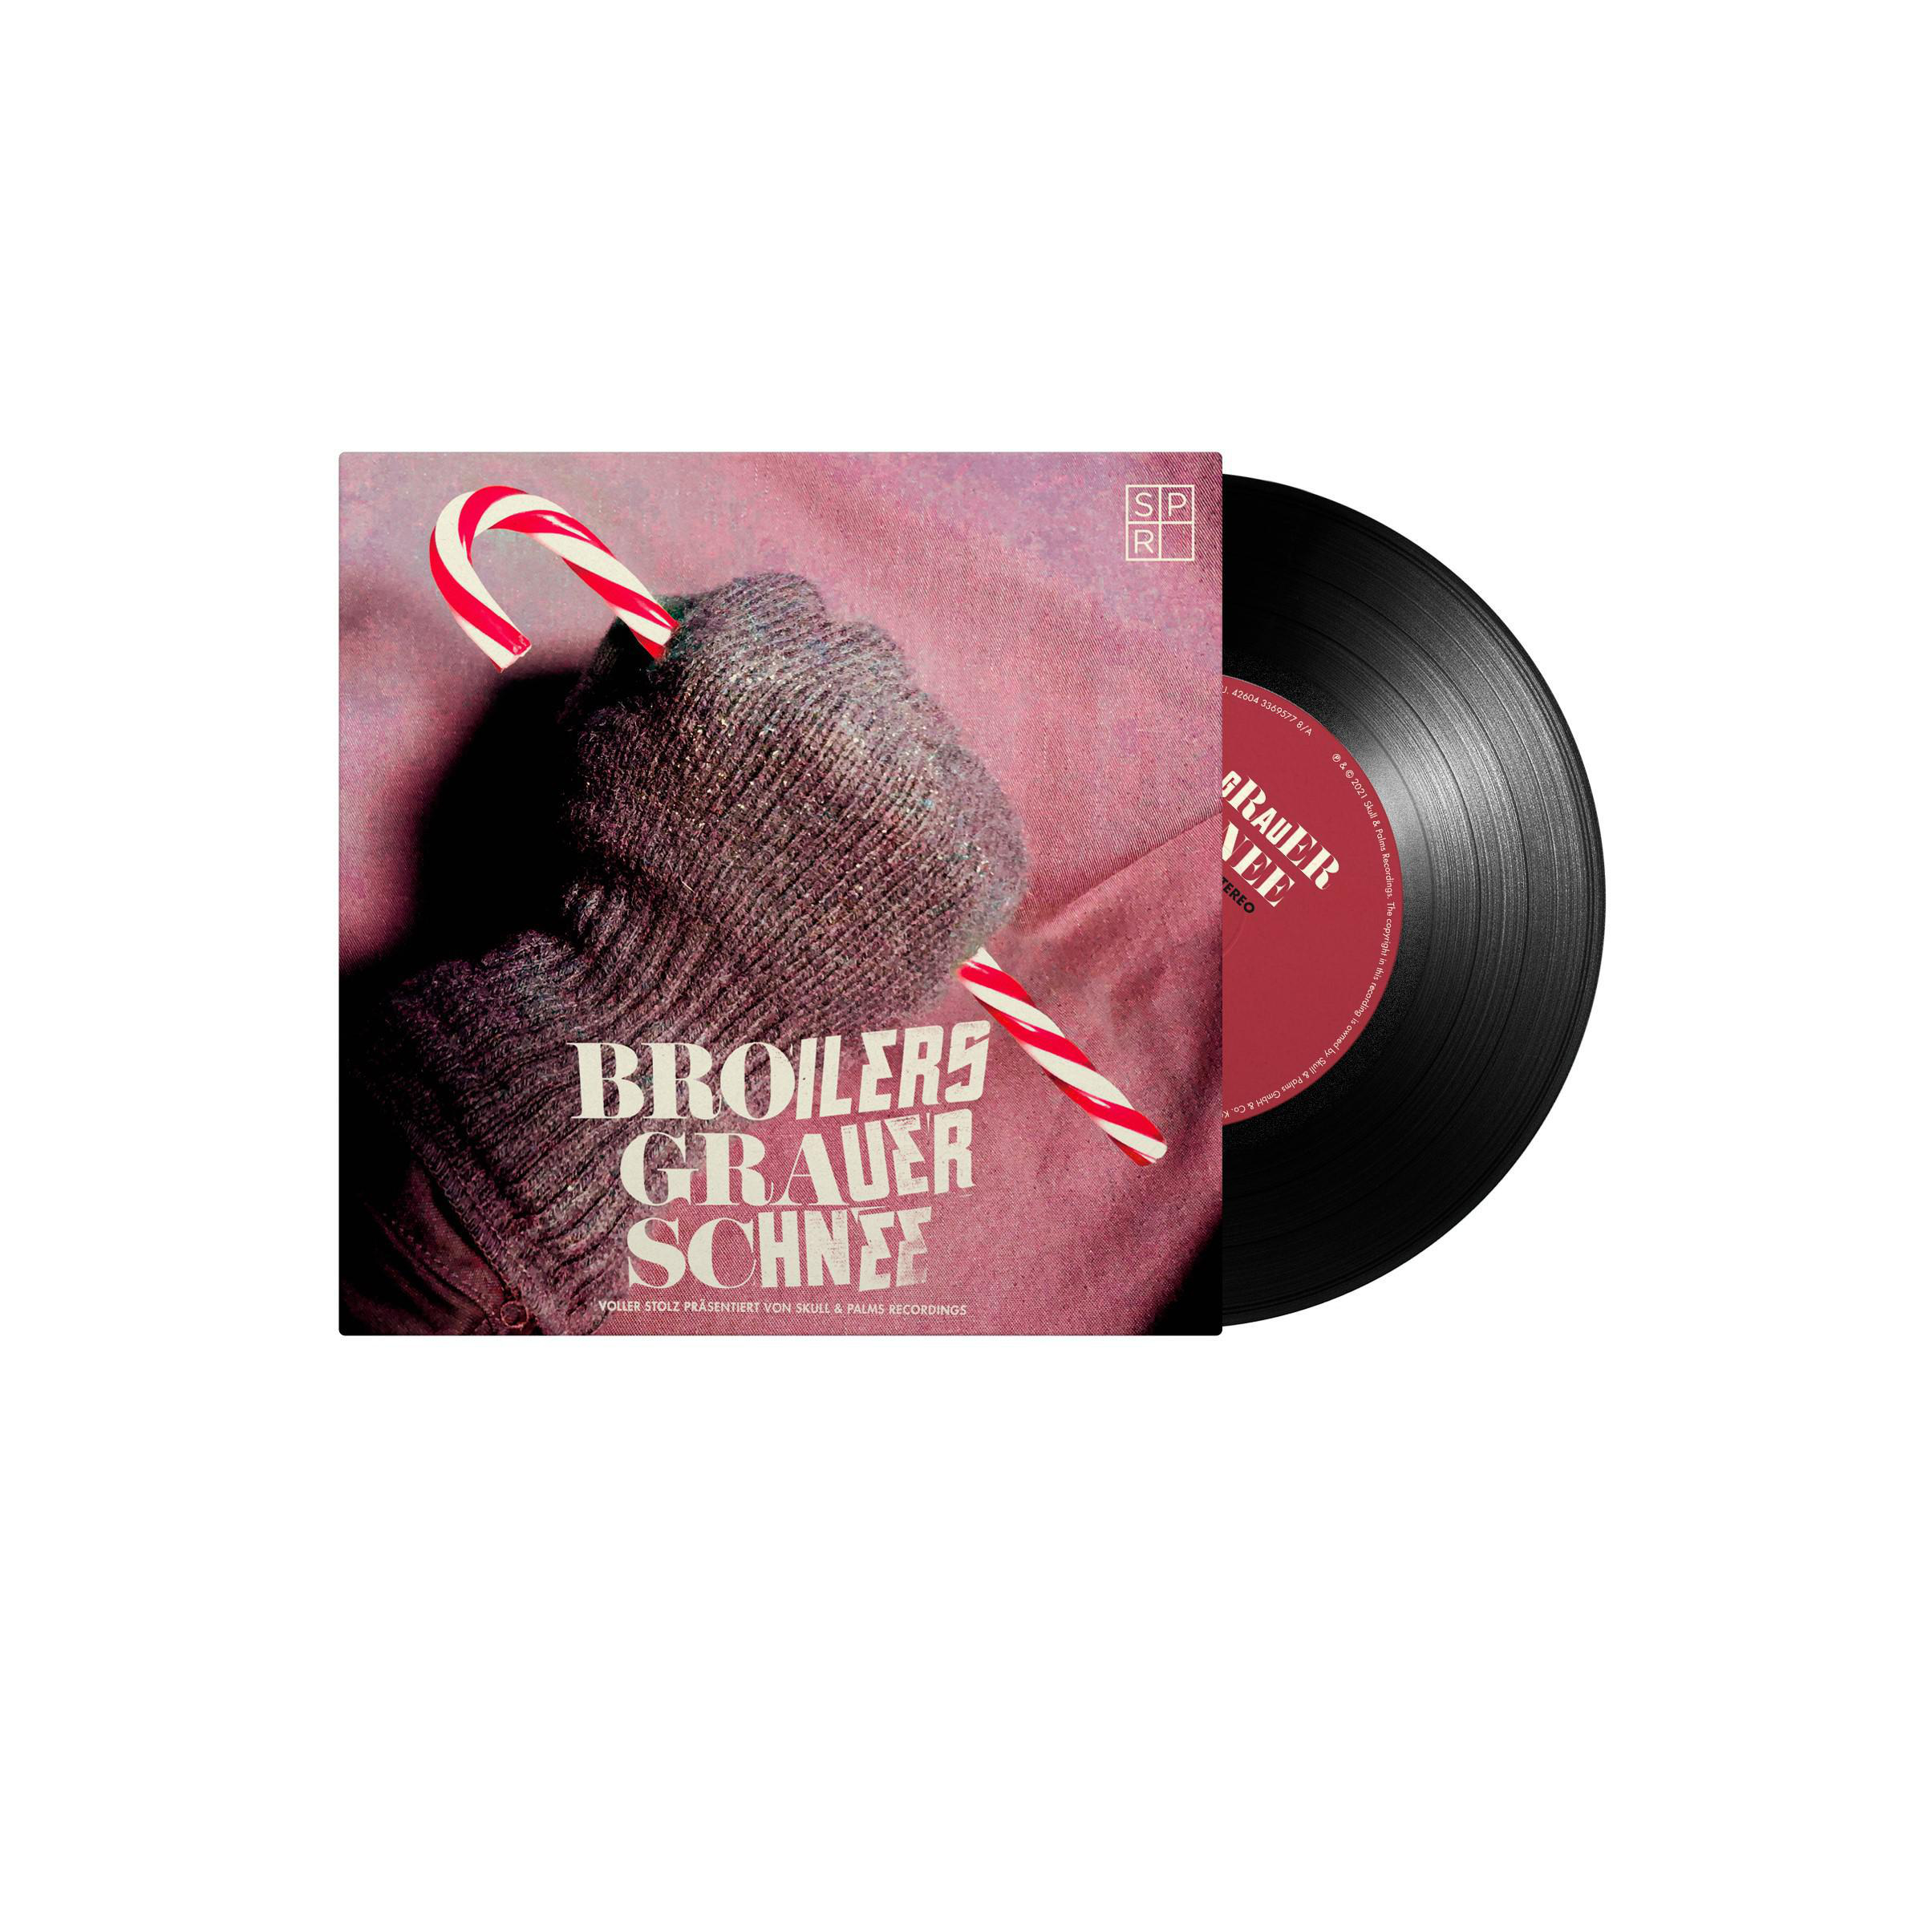 Broilers - Grauer Schnee And - (limitiert (Vinyl) nummeriert)